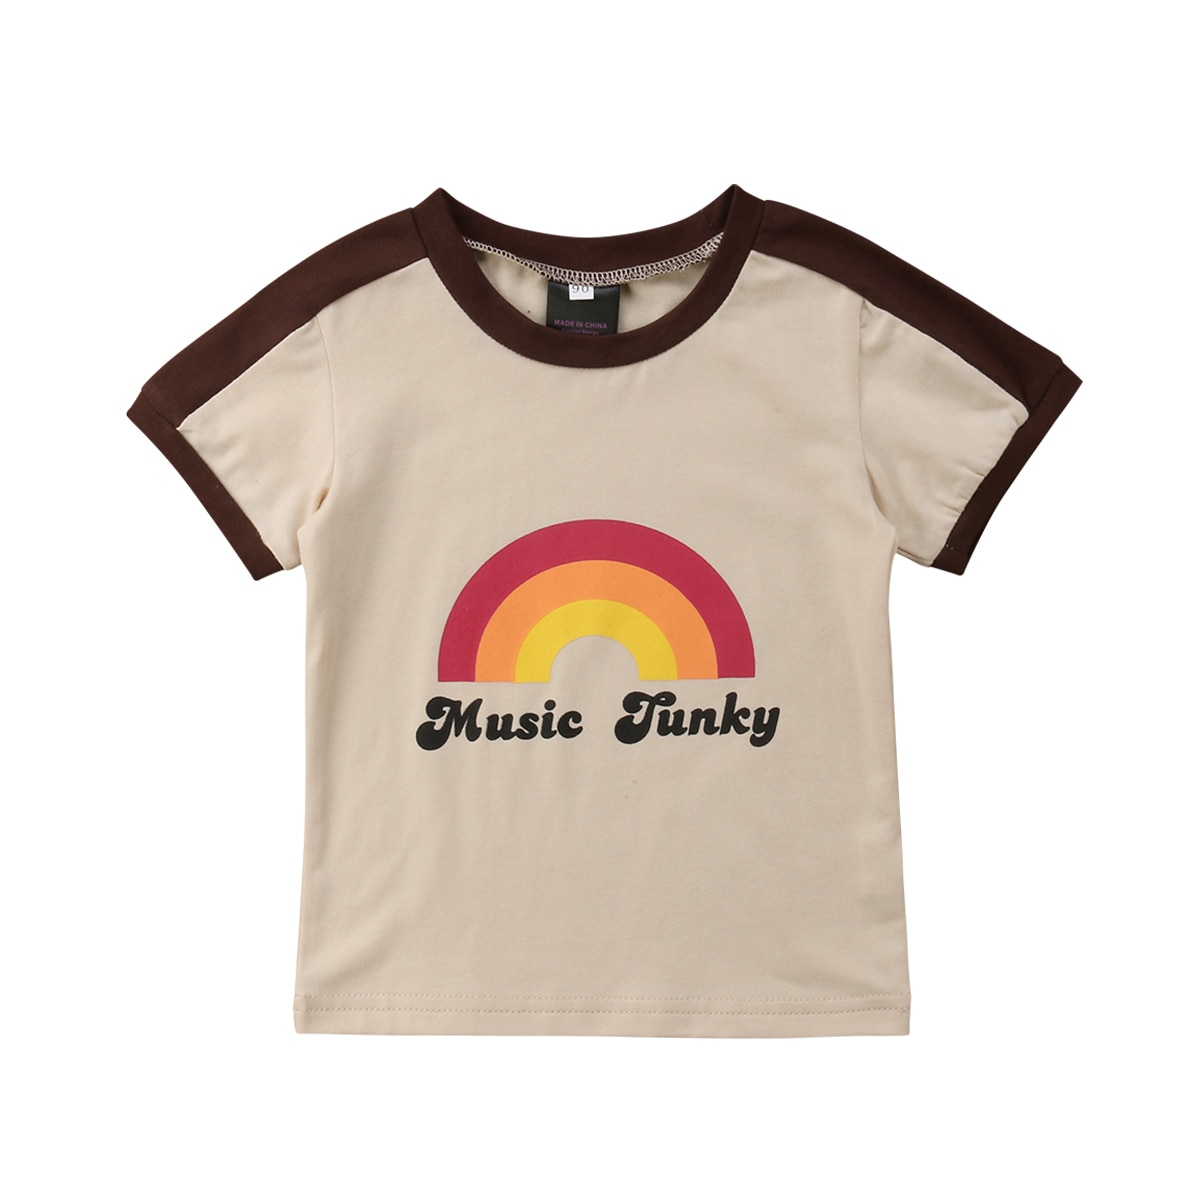 Børn baby drenge piger tøj t-shirt børn småbørn regnbuetoppe t-shirts sommer t-shirts